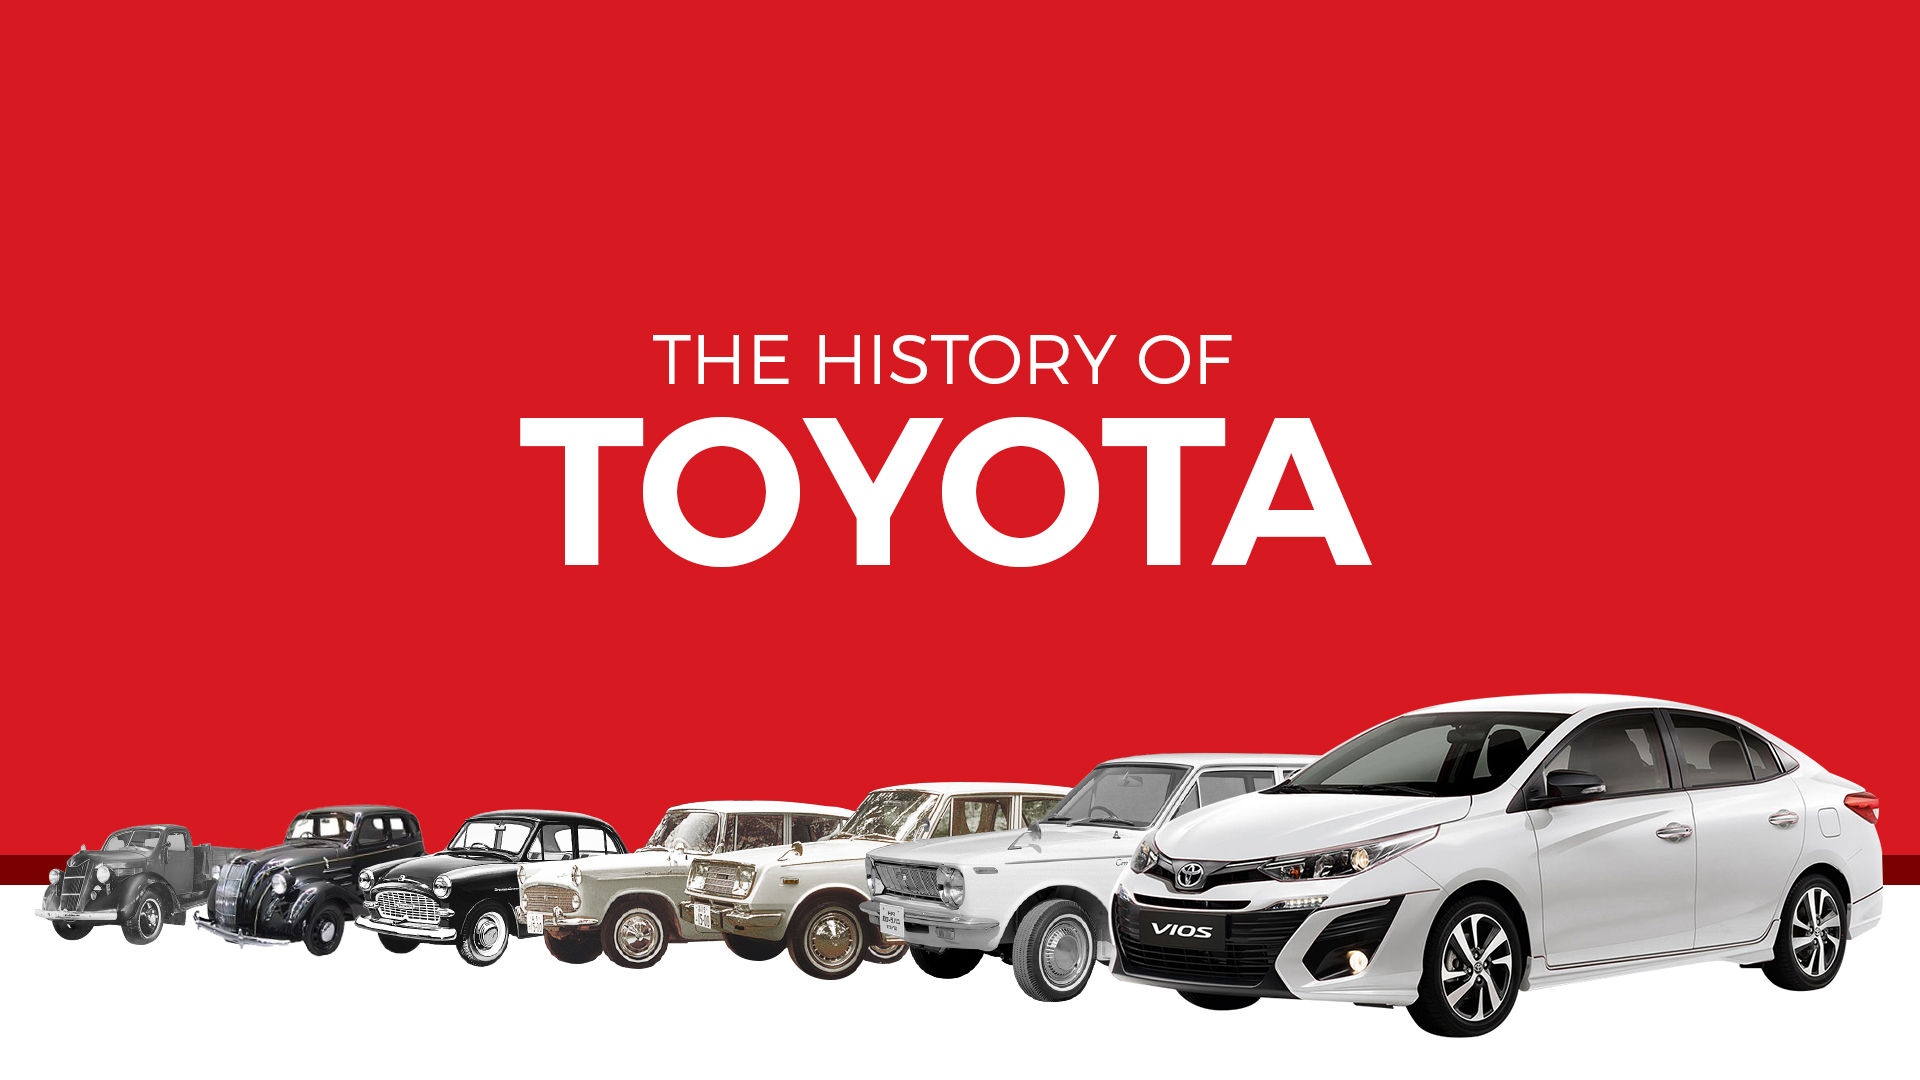 Toyotas history